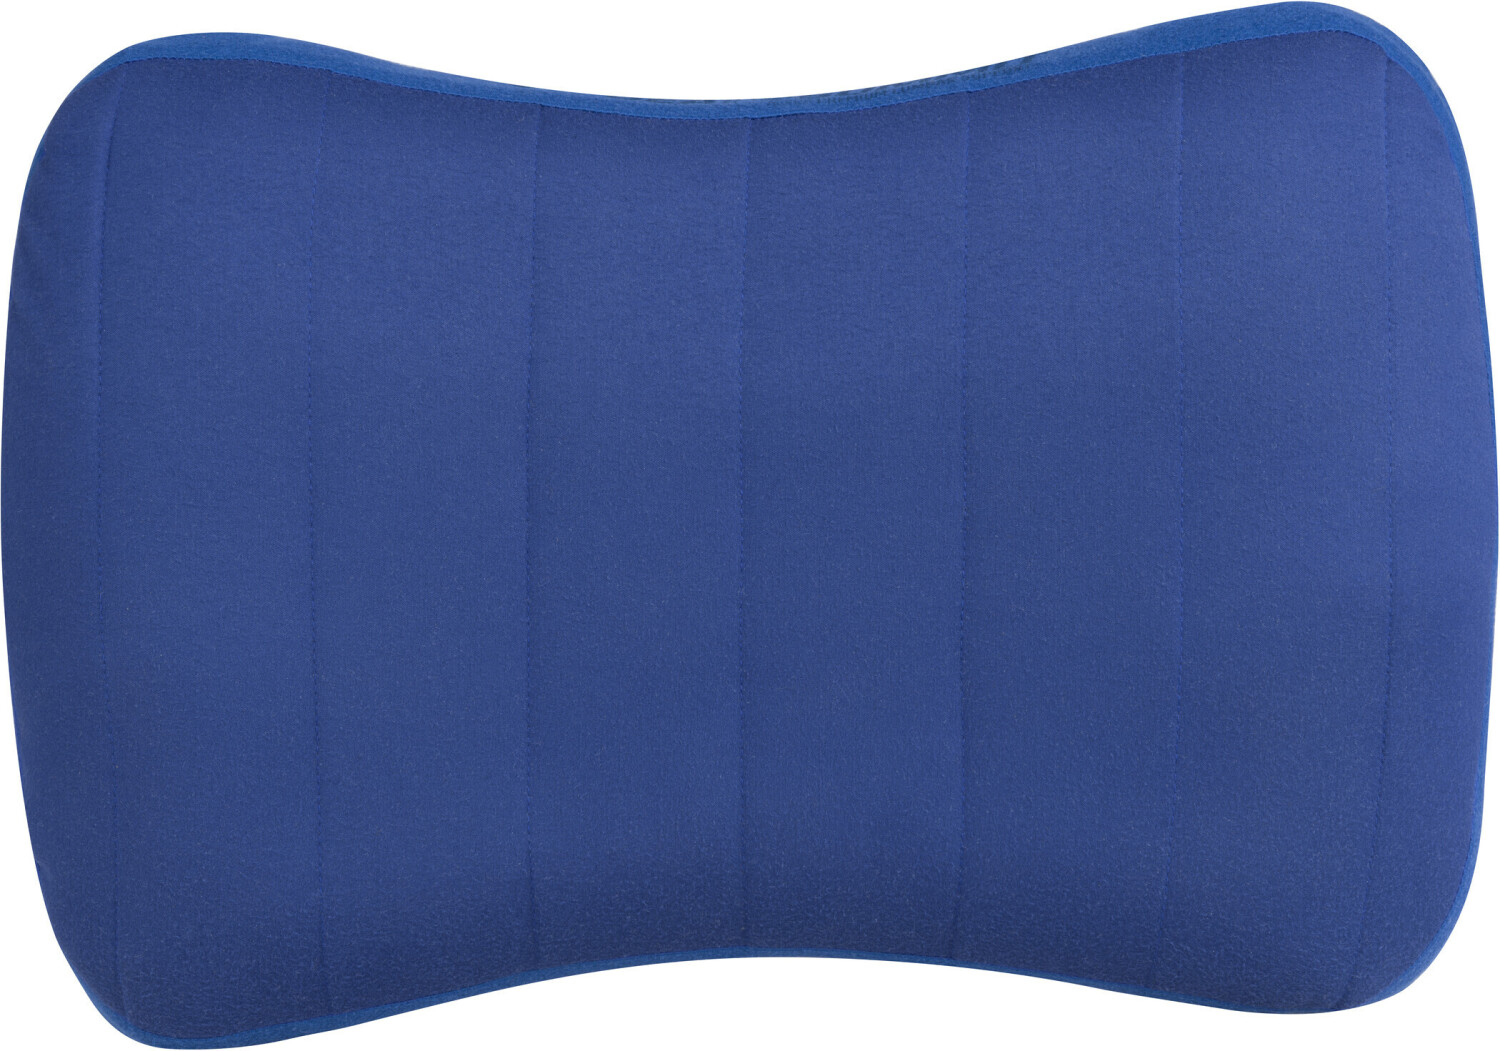 Sea to Summit Aeros Premium Lumbar Support Pillow navy blue ab 30